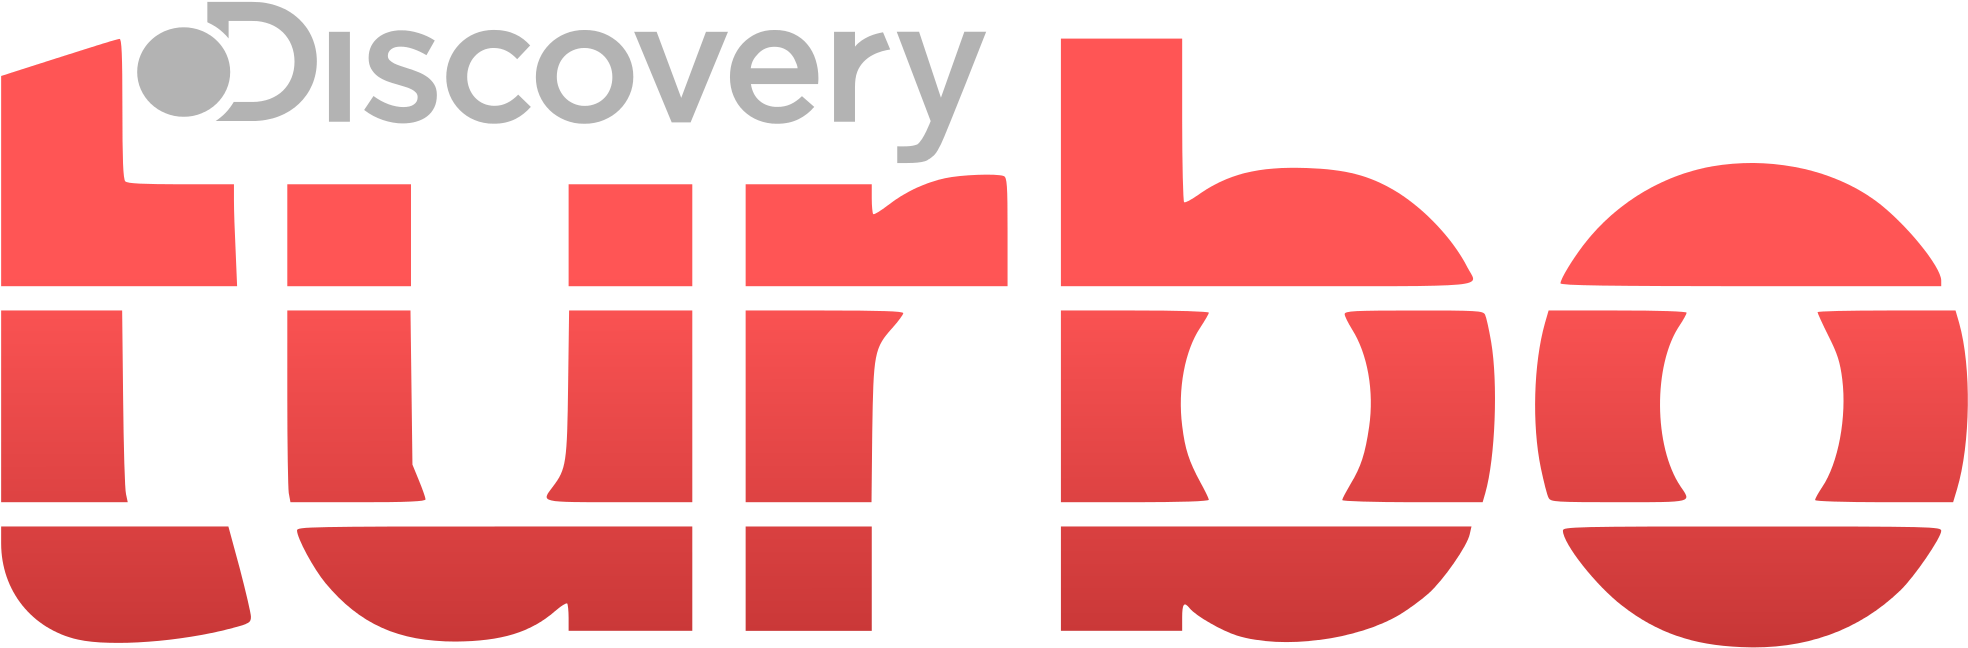 Open - Logo De Discovery Turbo (2000x667)